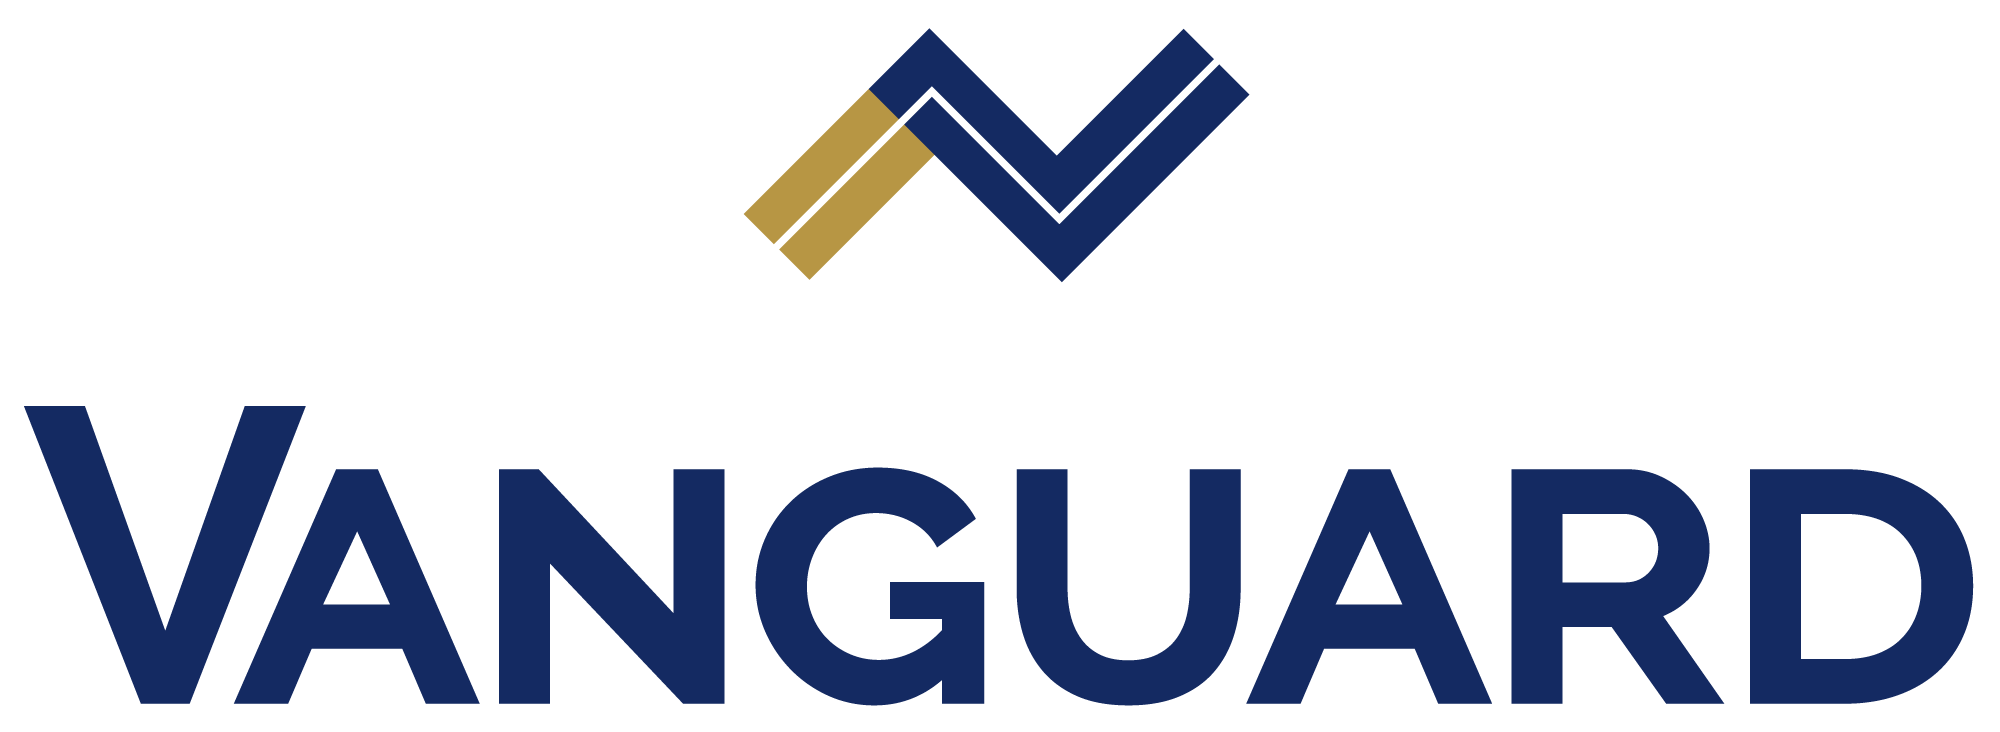 Vangaurd_Logo_Stacked_Color